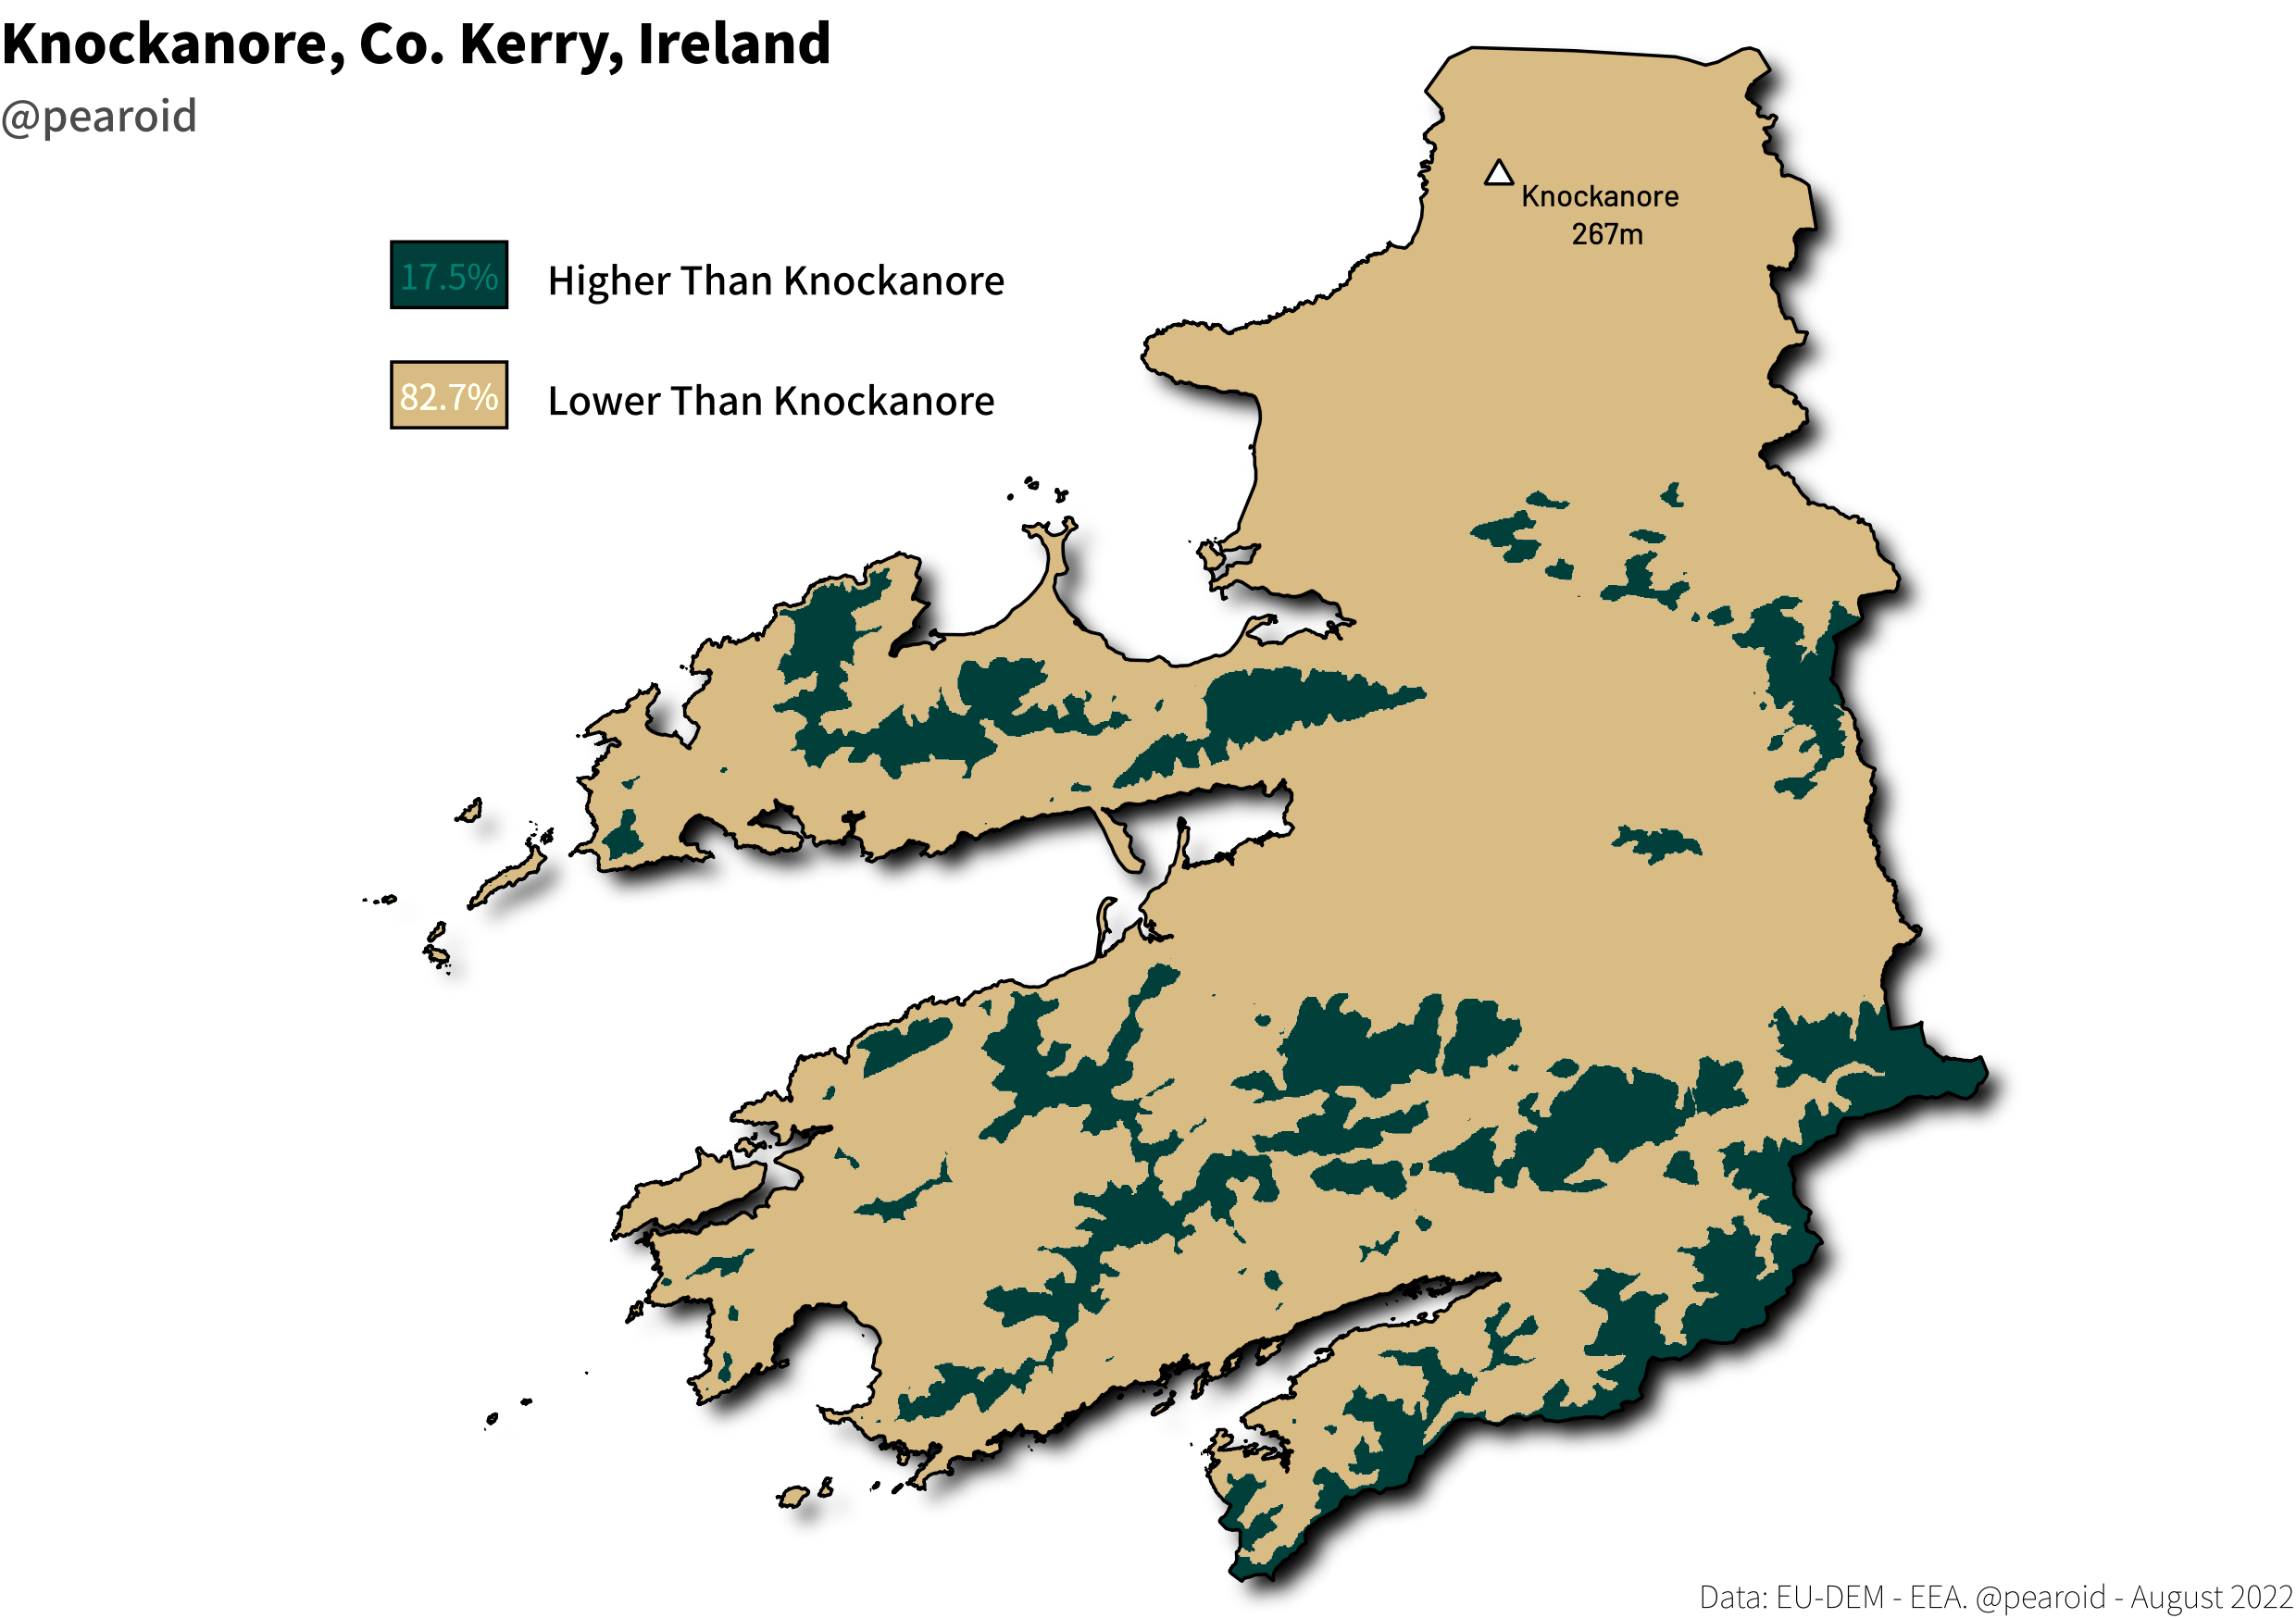 Knockanore, Co. Kerry, Ireland